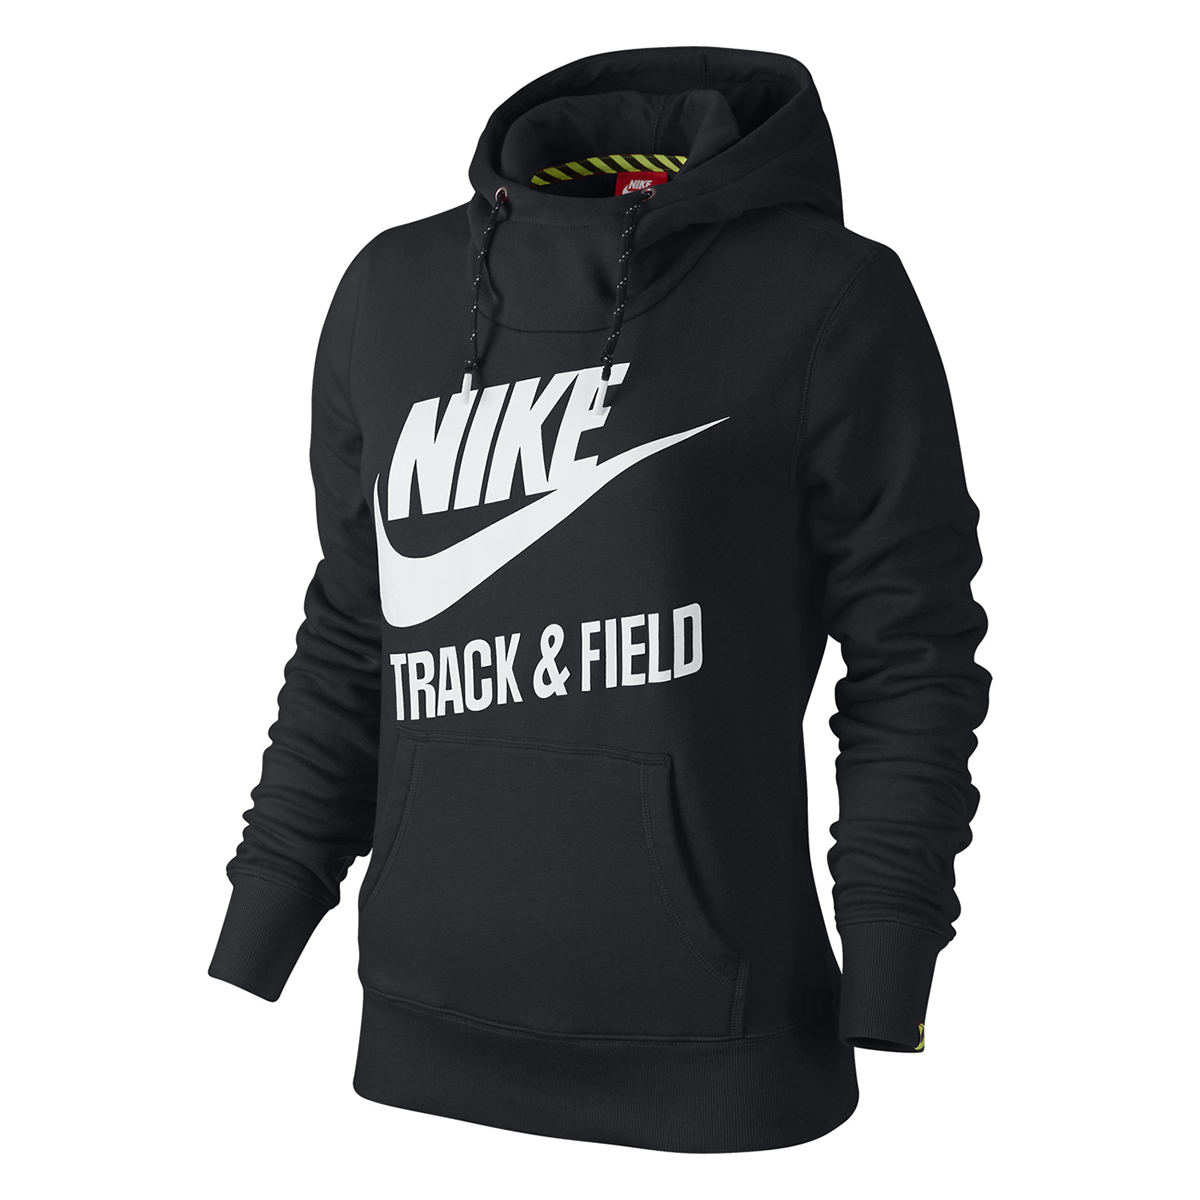 Nike tracking. Nike track and field толстовка. Nike Hoodie track field. Худи найк Атлетикс. Nike Athletic худи.